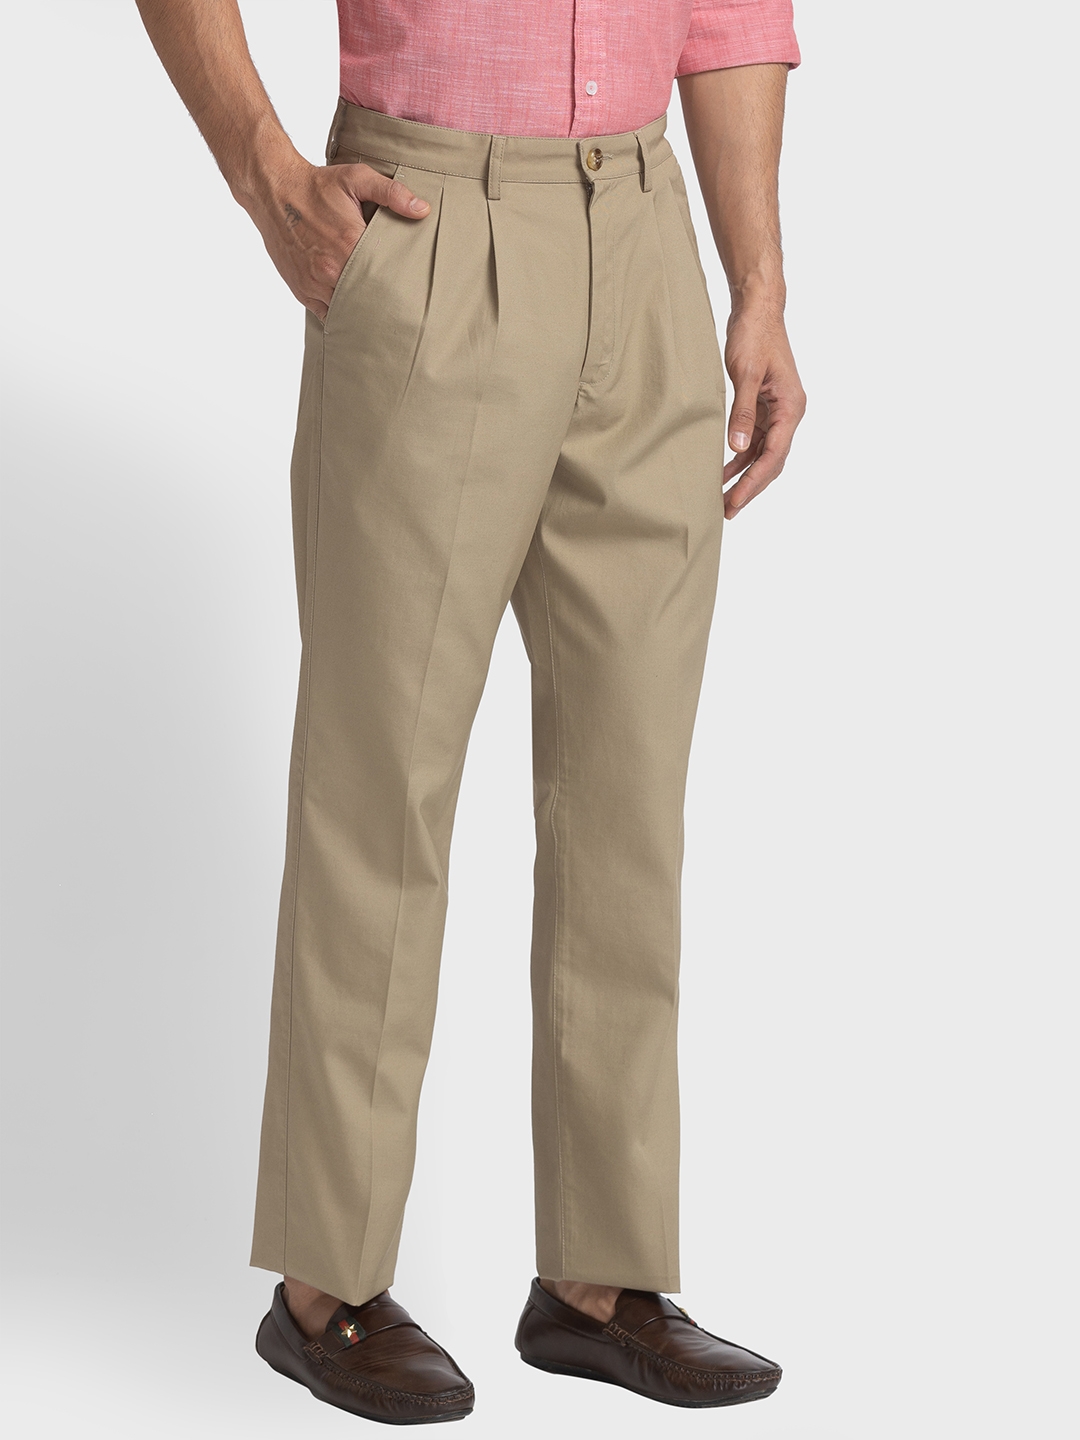 Buy Beige Trousers & Pants for Men by Colorplus Online | Ajio.com